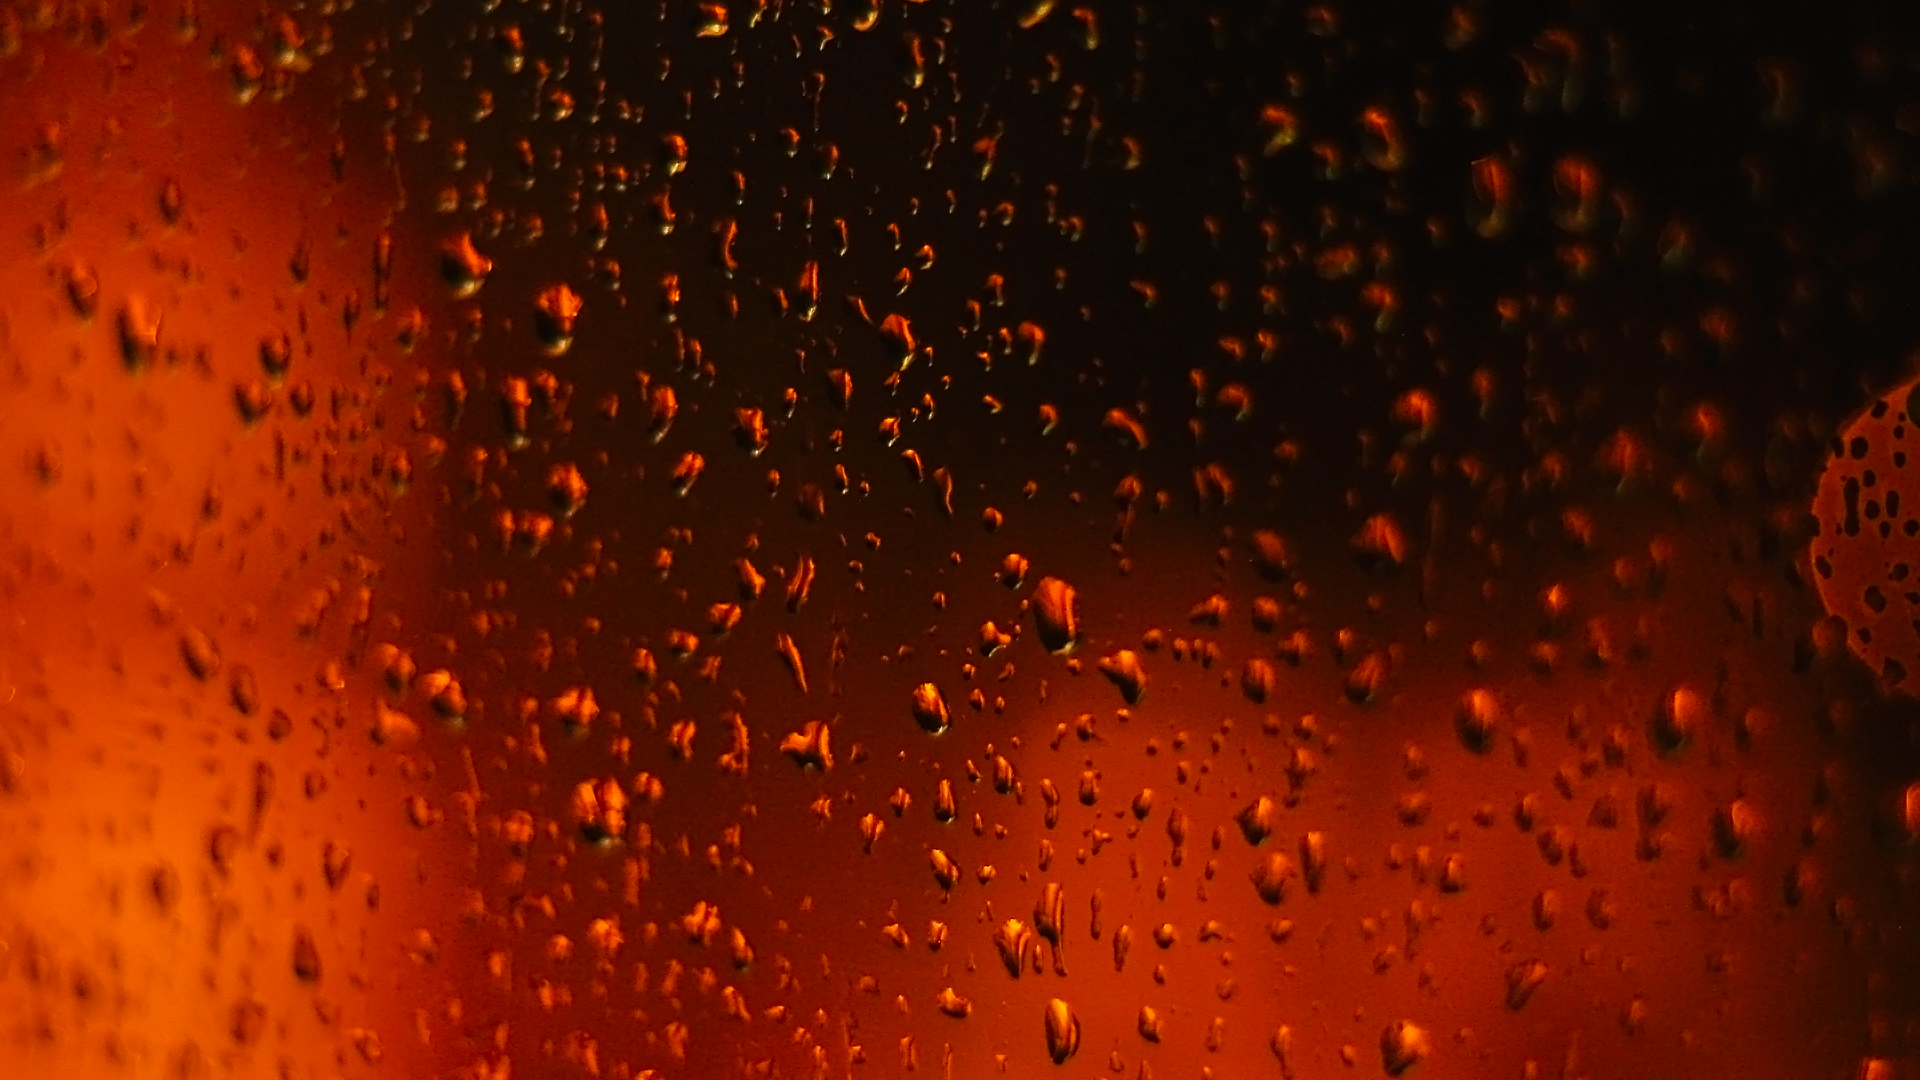 rain drops live wallpaper, water, red, orange, geological phenomenon, drop